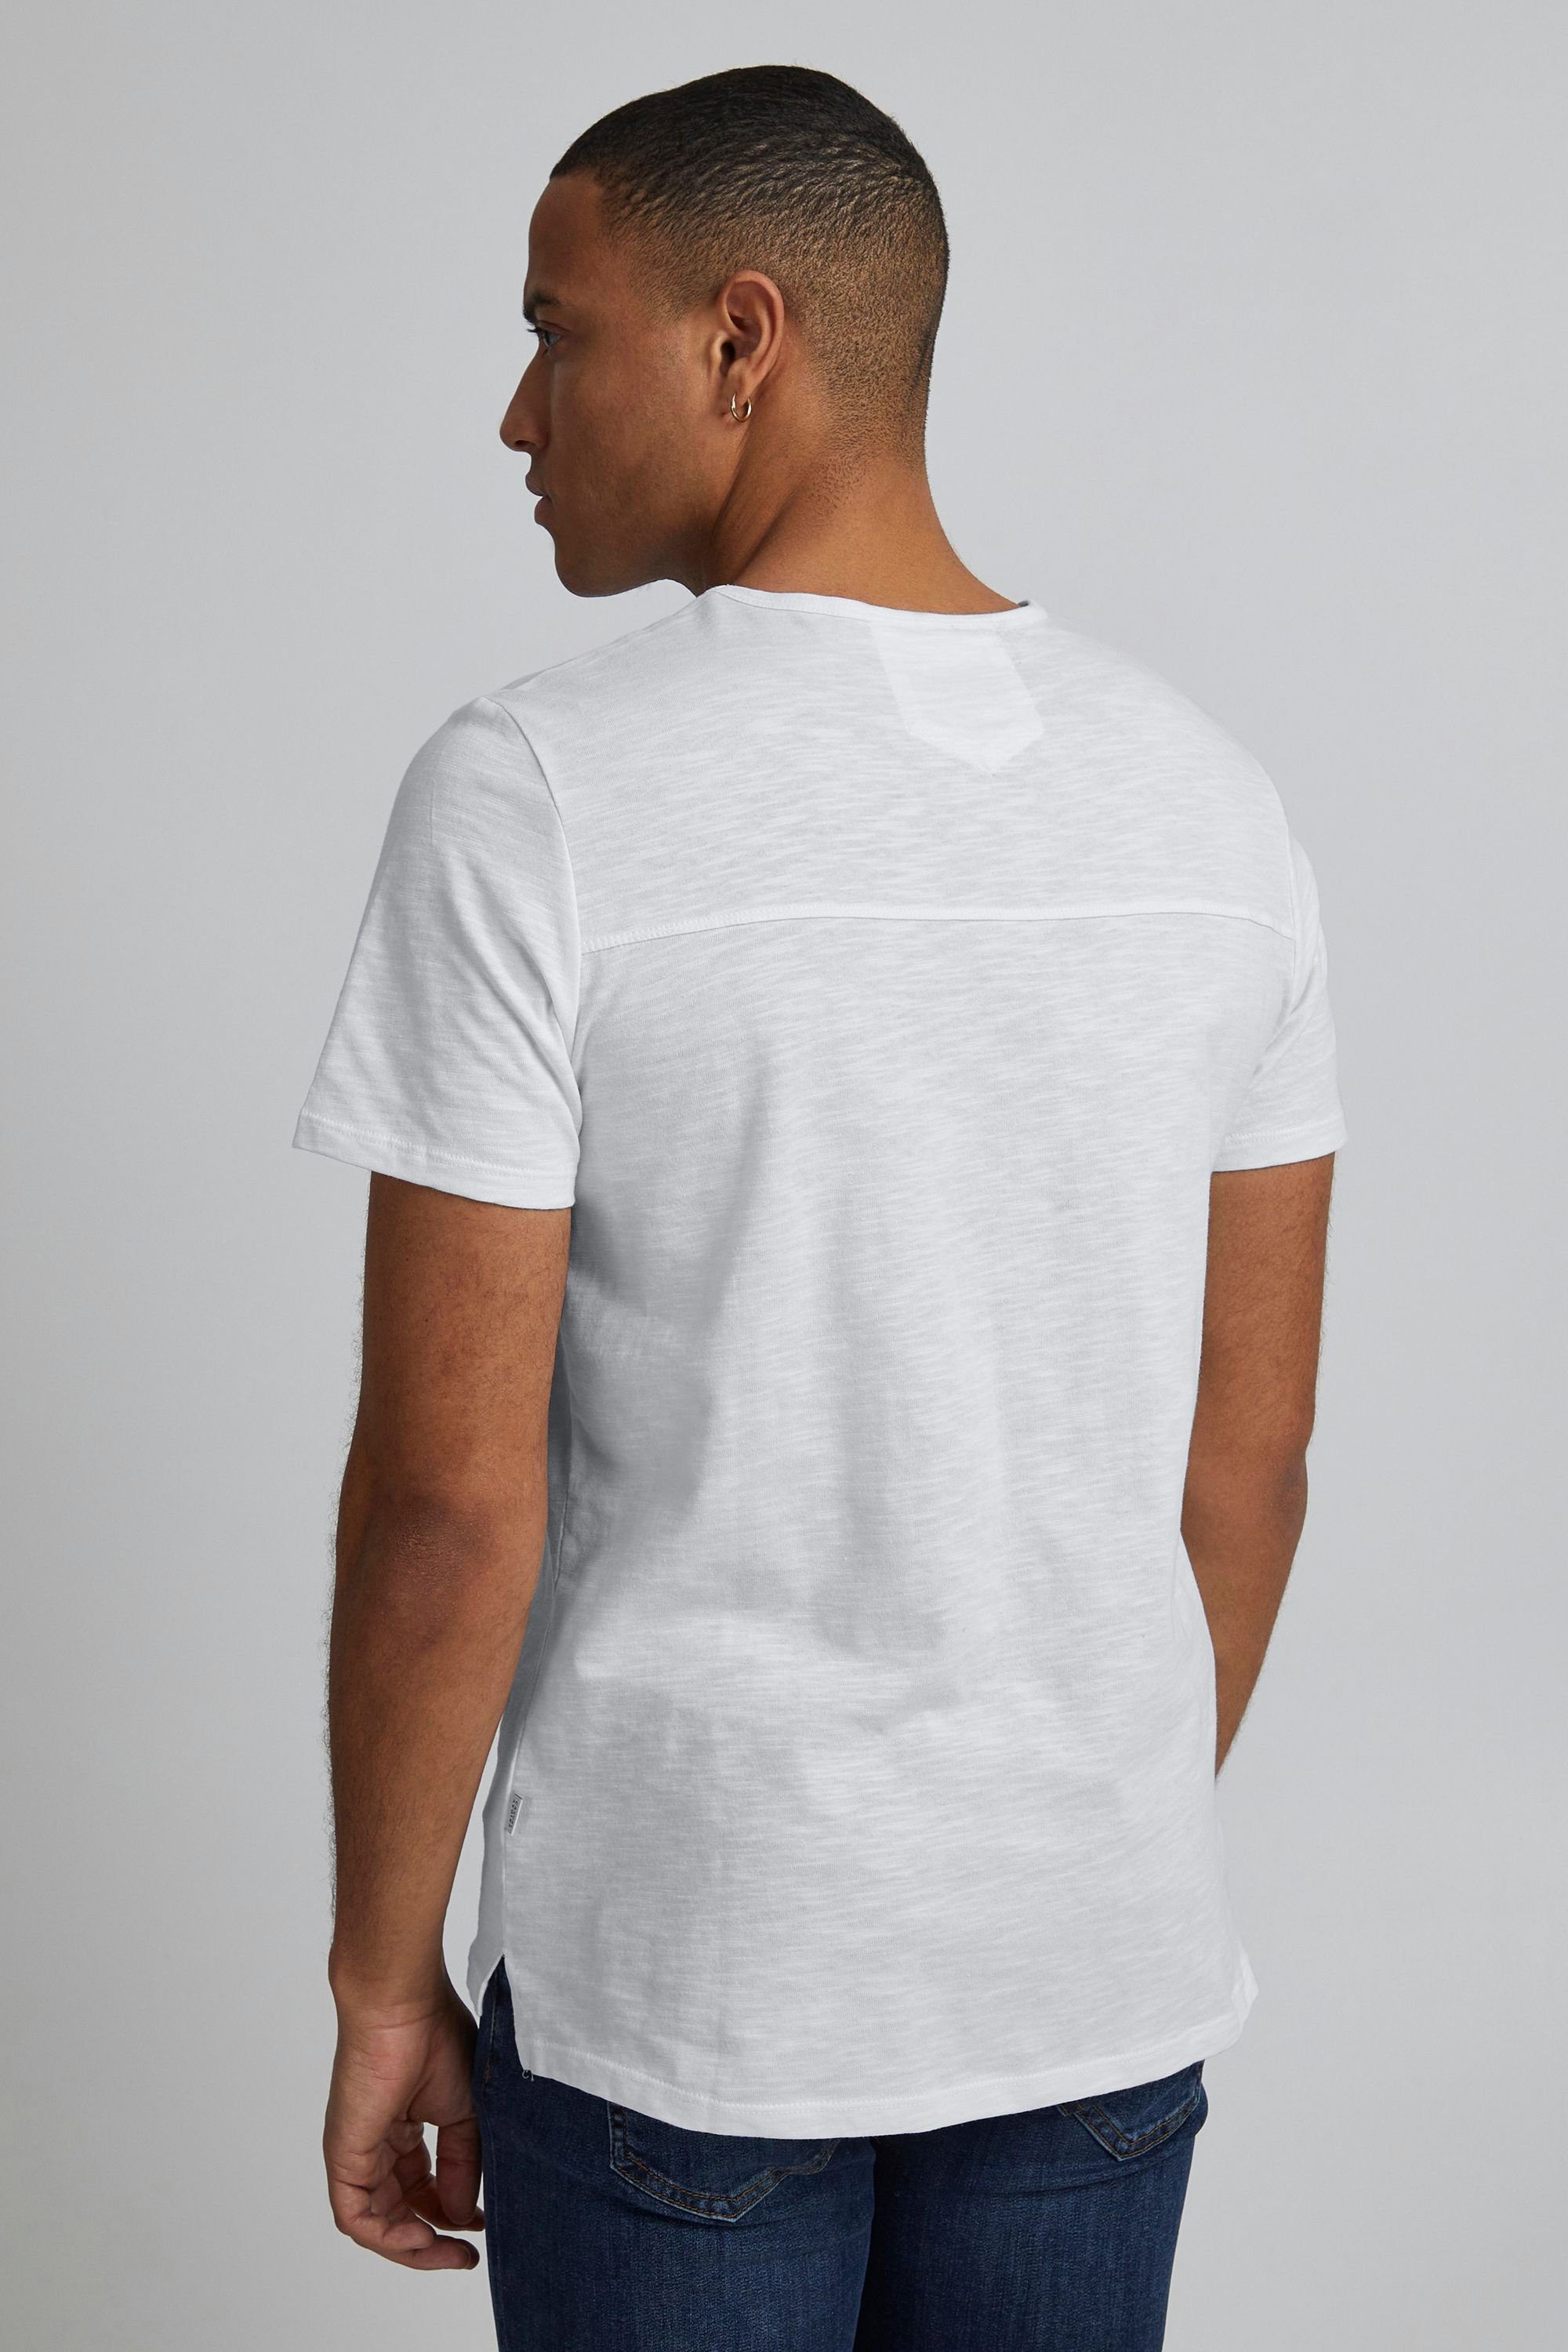 - 20502453 T-Shirt Shirt CFGrant (50104) Friday Rundhalsausschnitt Casual white mit Bright